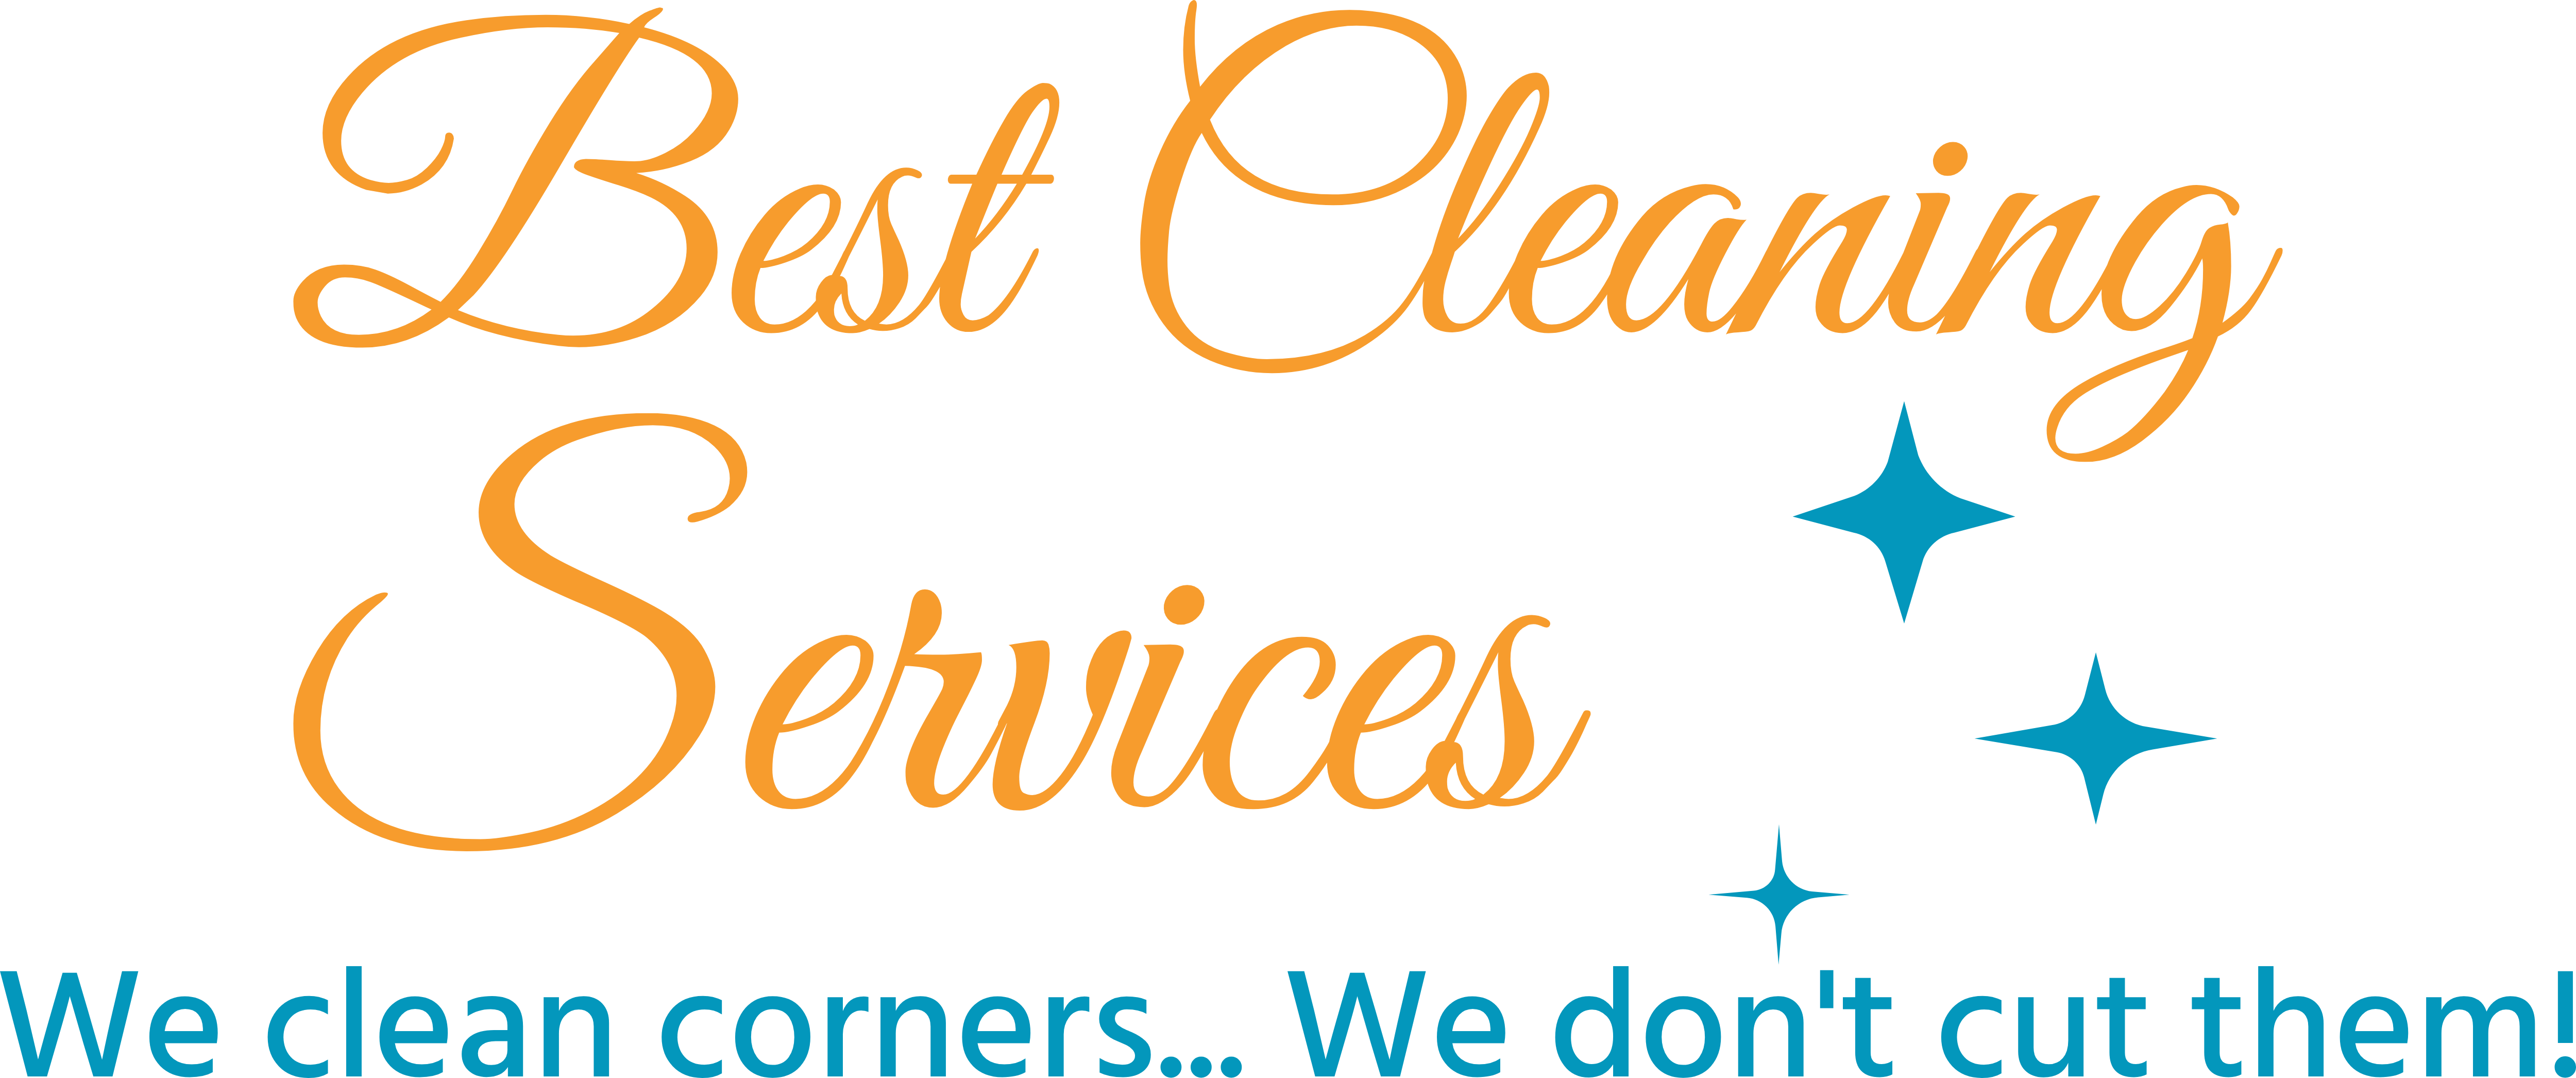 Best Cleaning Services | Nashville, TN